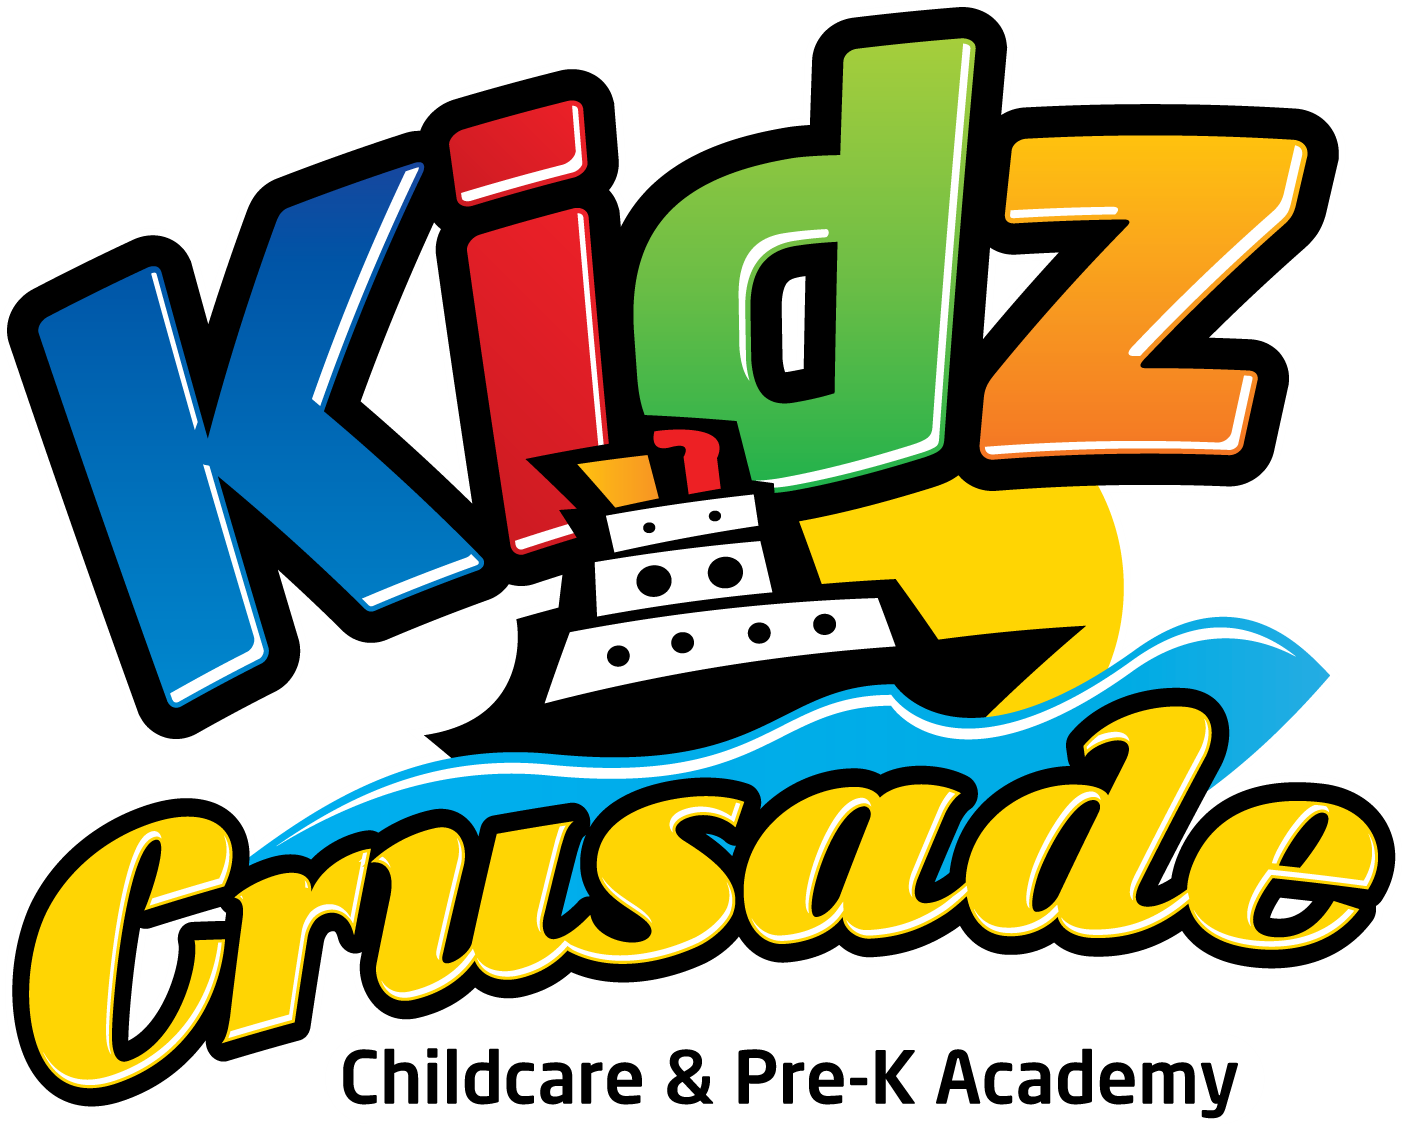 Kidz Crusade Academy, LLC